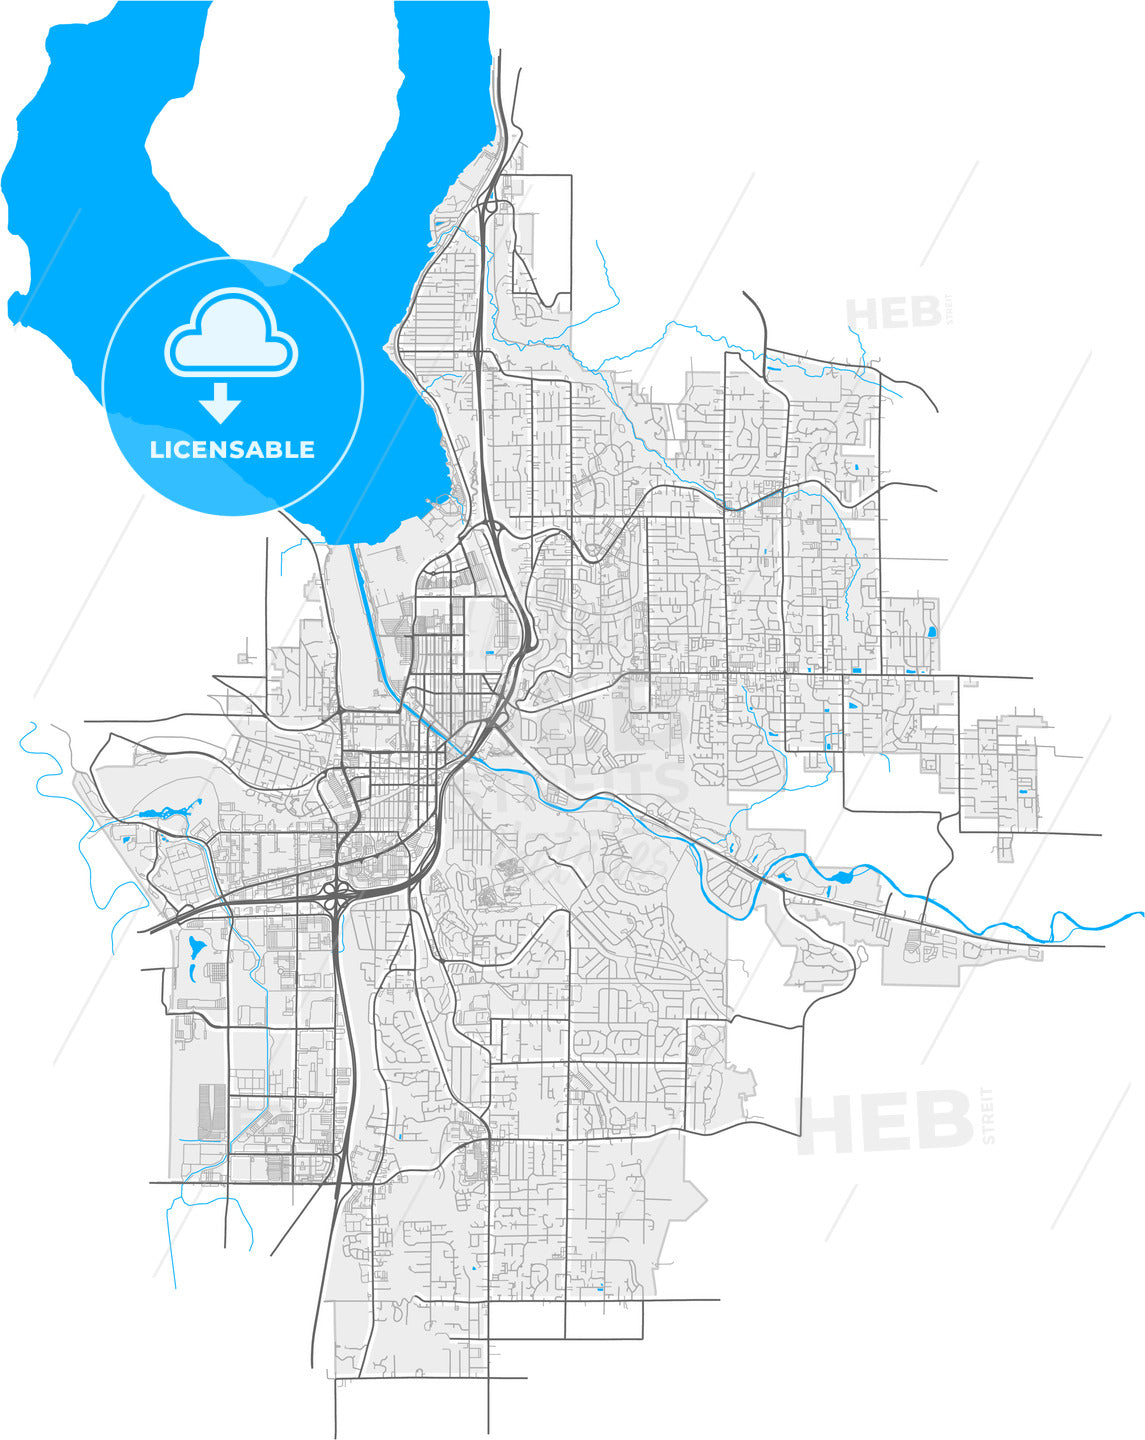 Renton, Washington, United States, high quality vector map